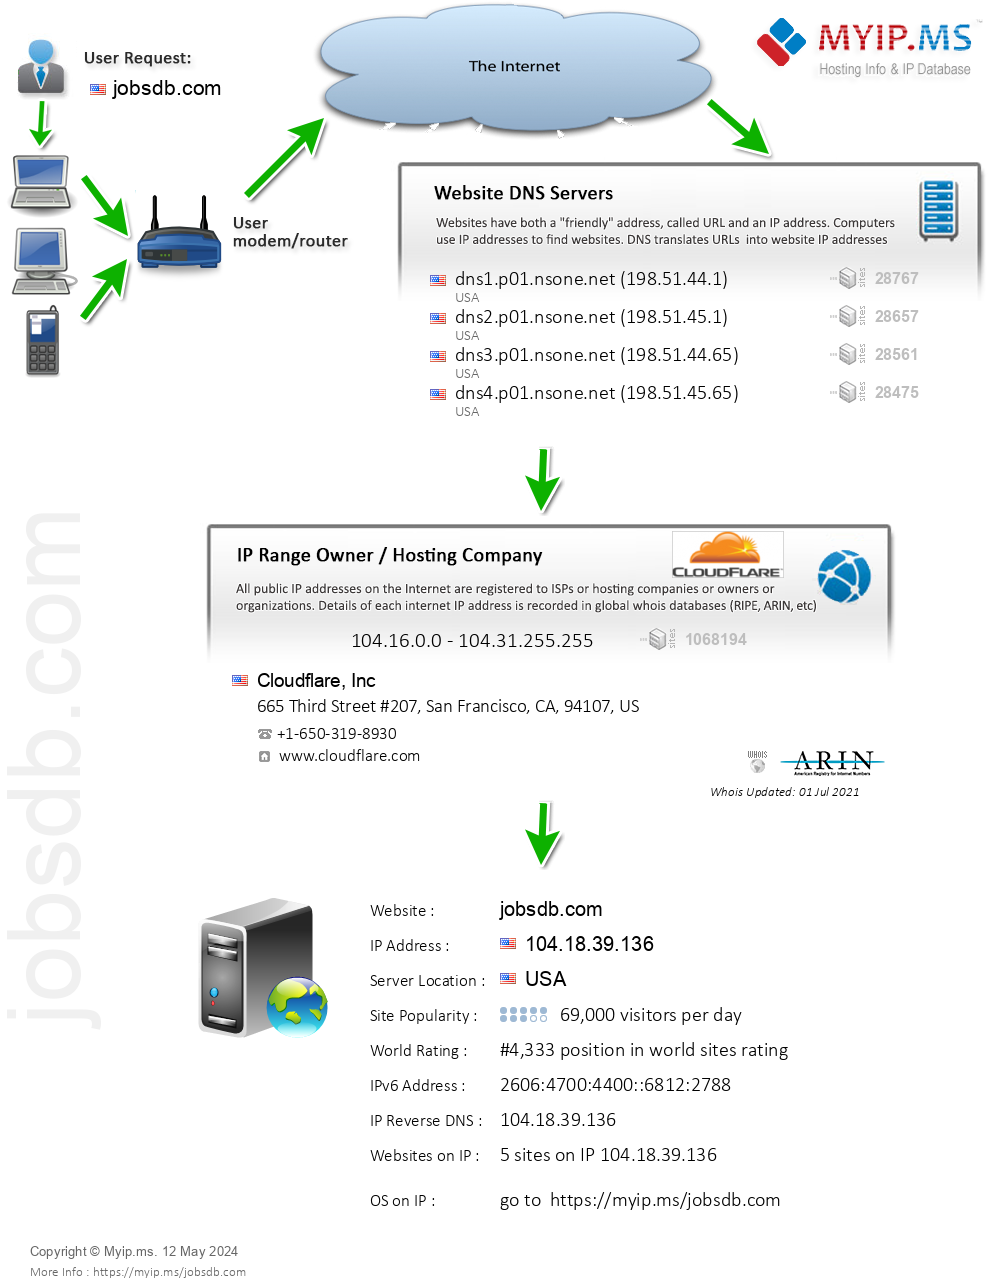 Jobsdb.com - Website Hosting Visual IP Diagram